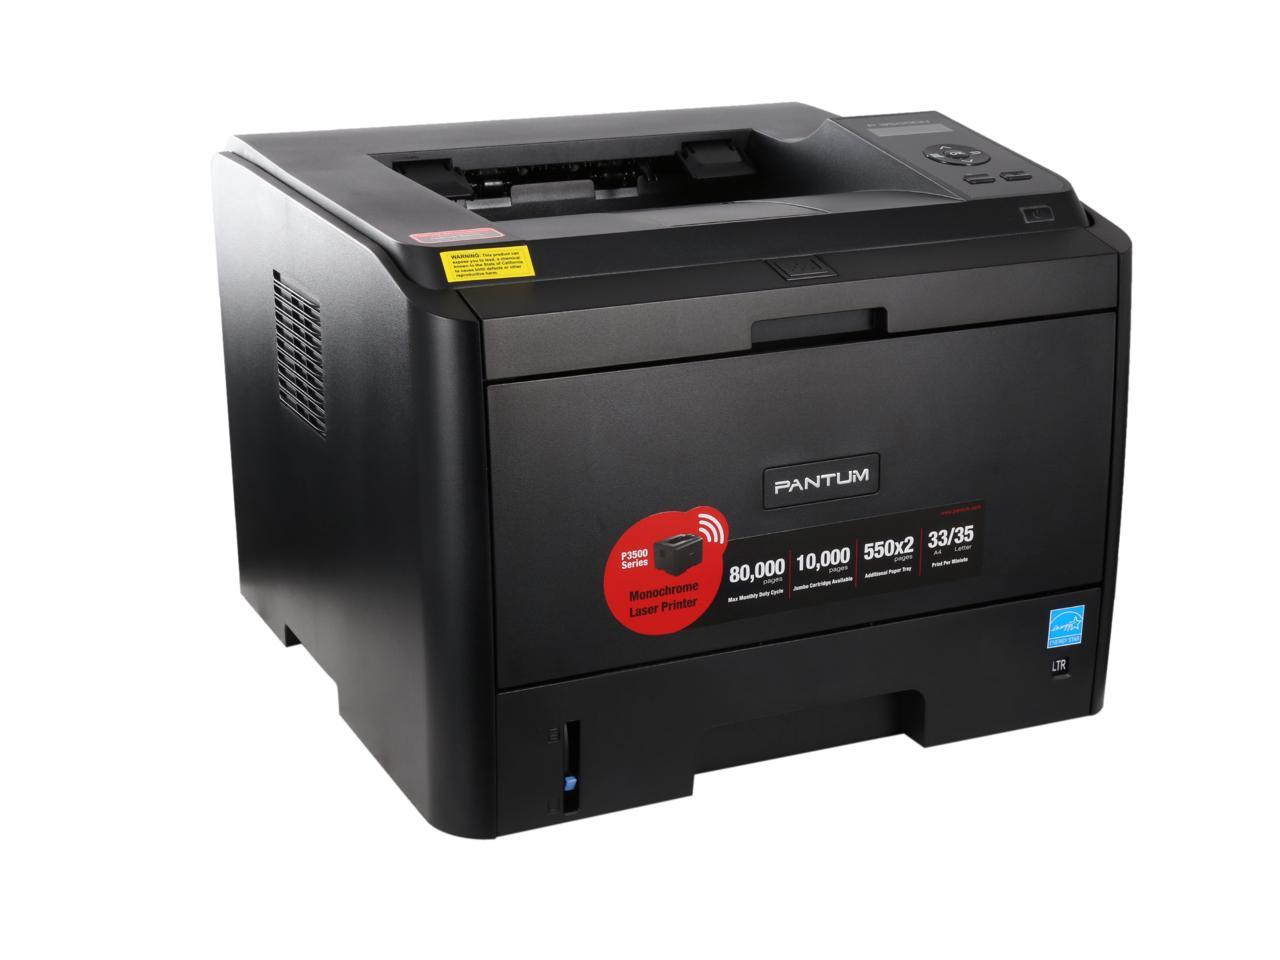 best mono laser printer for mac 2015